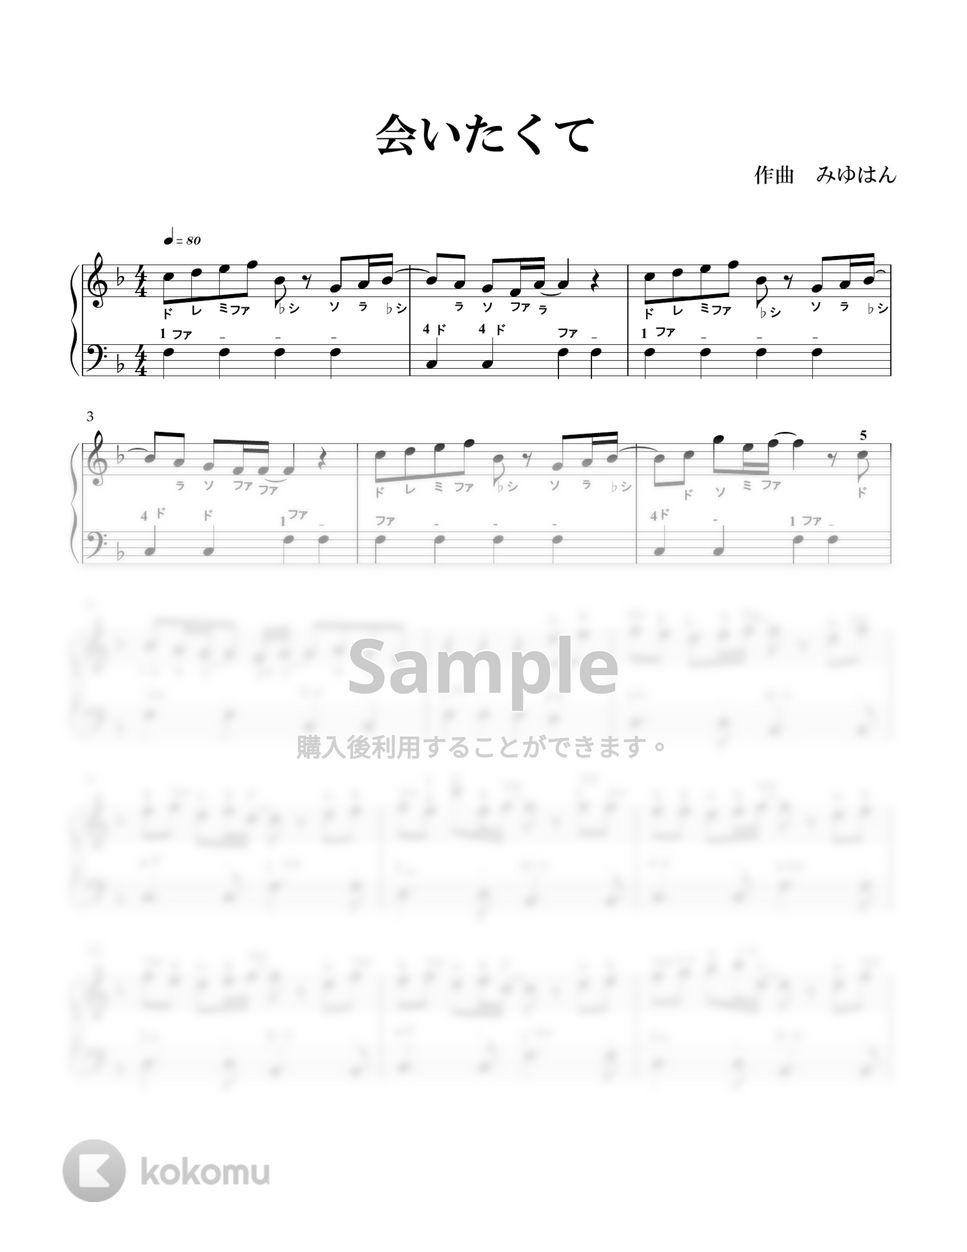 Ado - 会いたくて (ピアノかんたんドレミつき) by nokari88